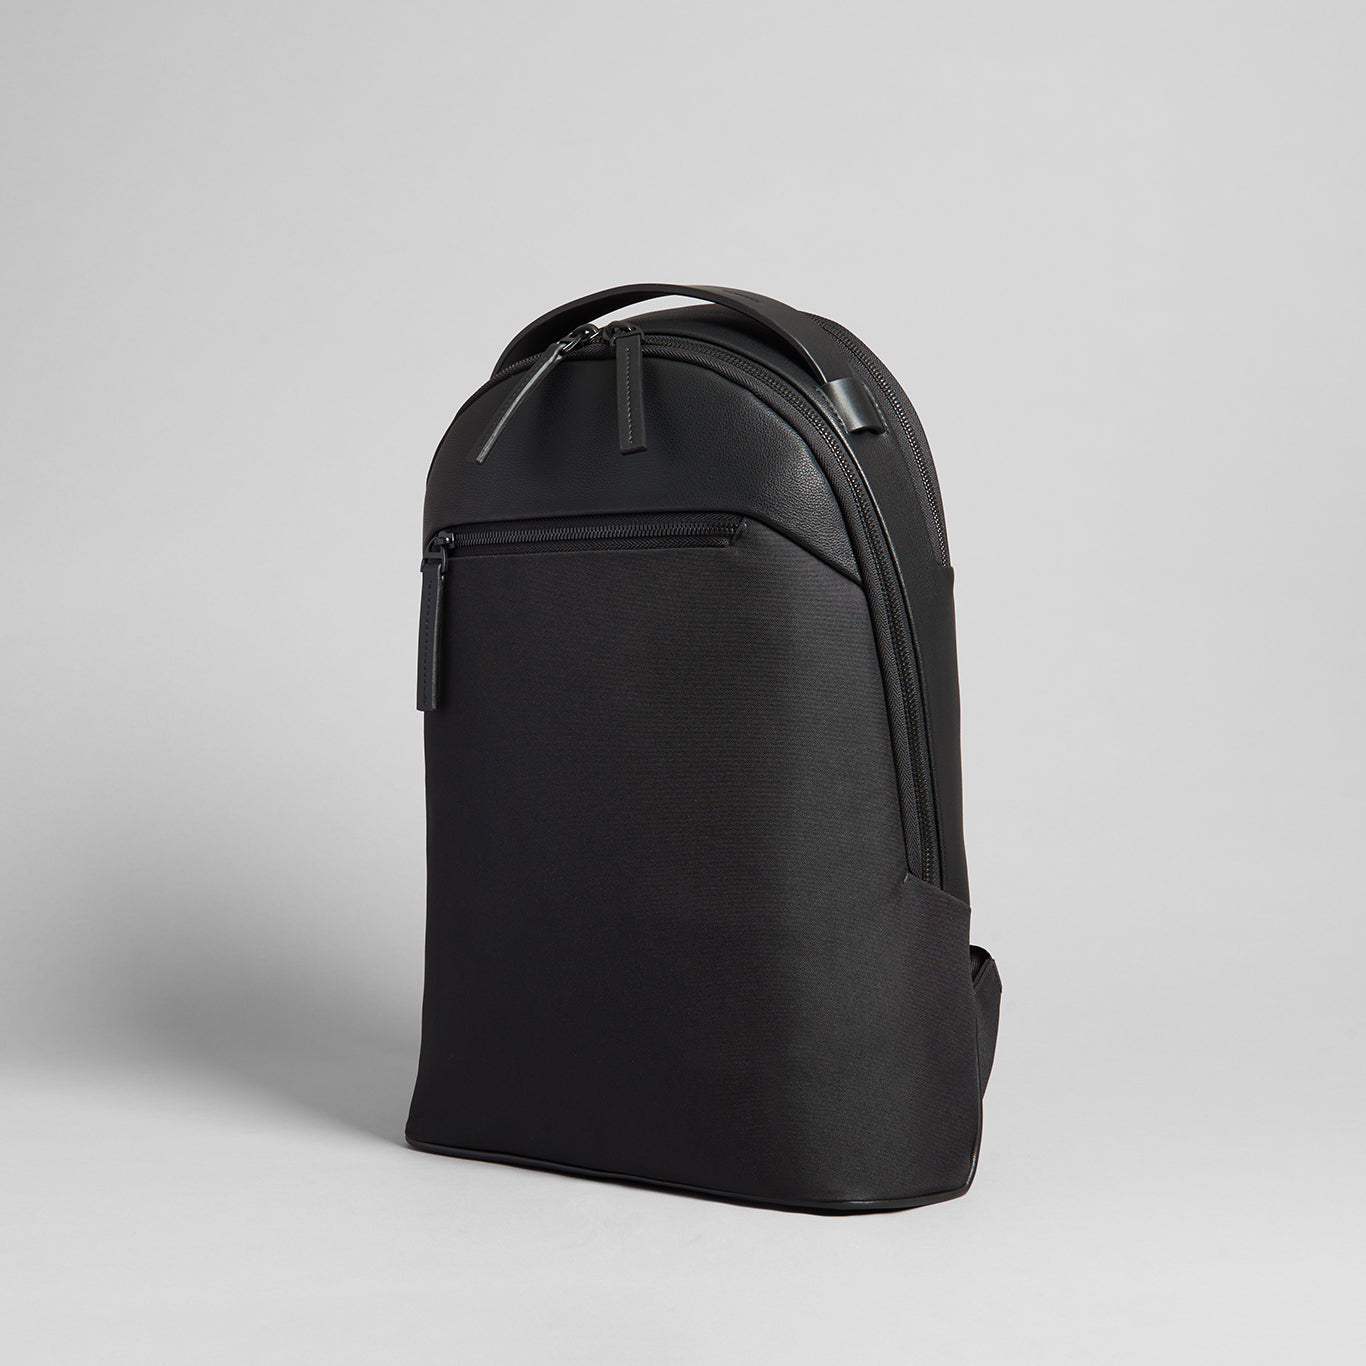 V Shiny Bag - Black Or Red - Luxe Finds UK